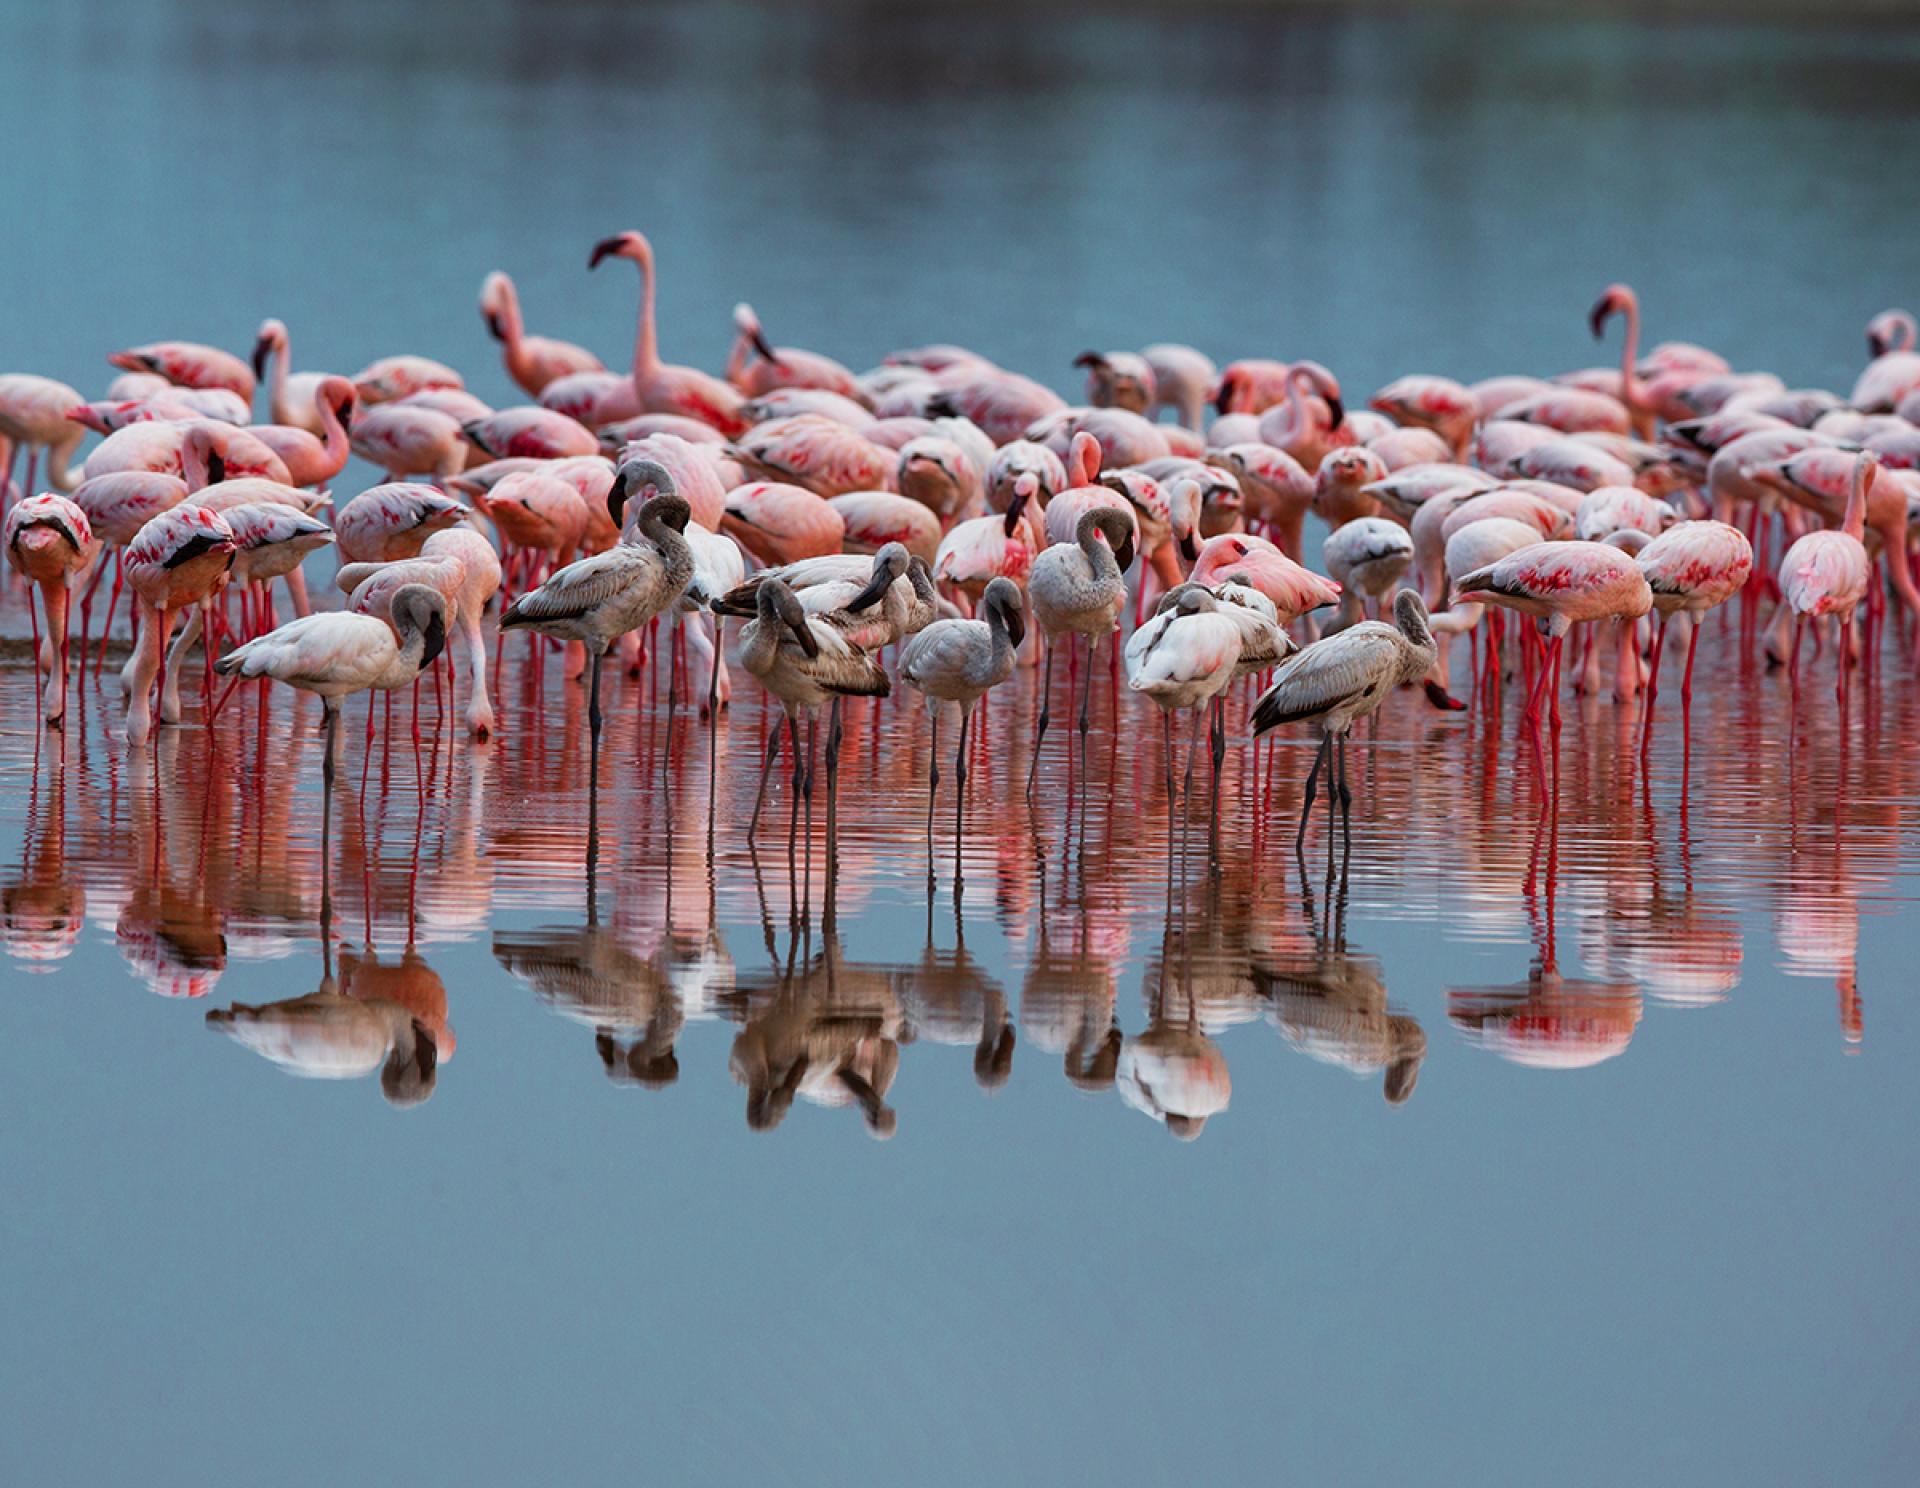 London Photography Awards Winner - Wonderful Flamingos